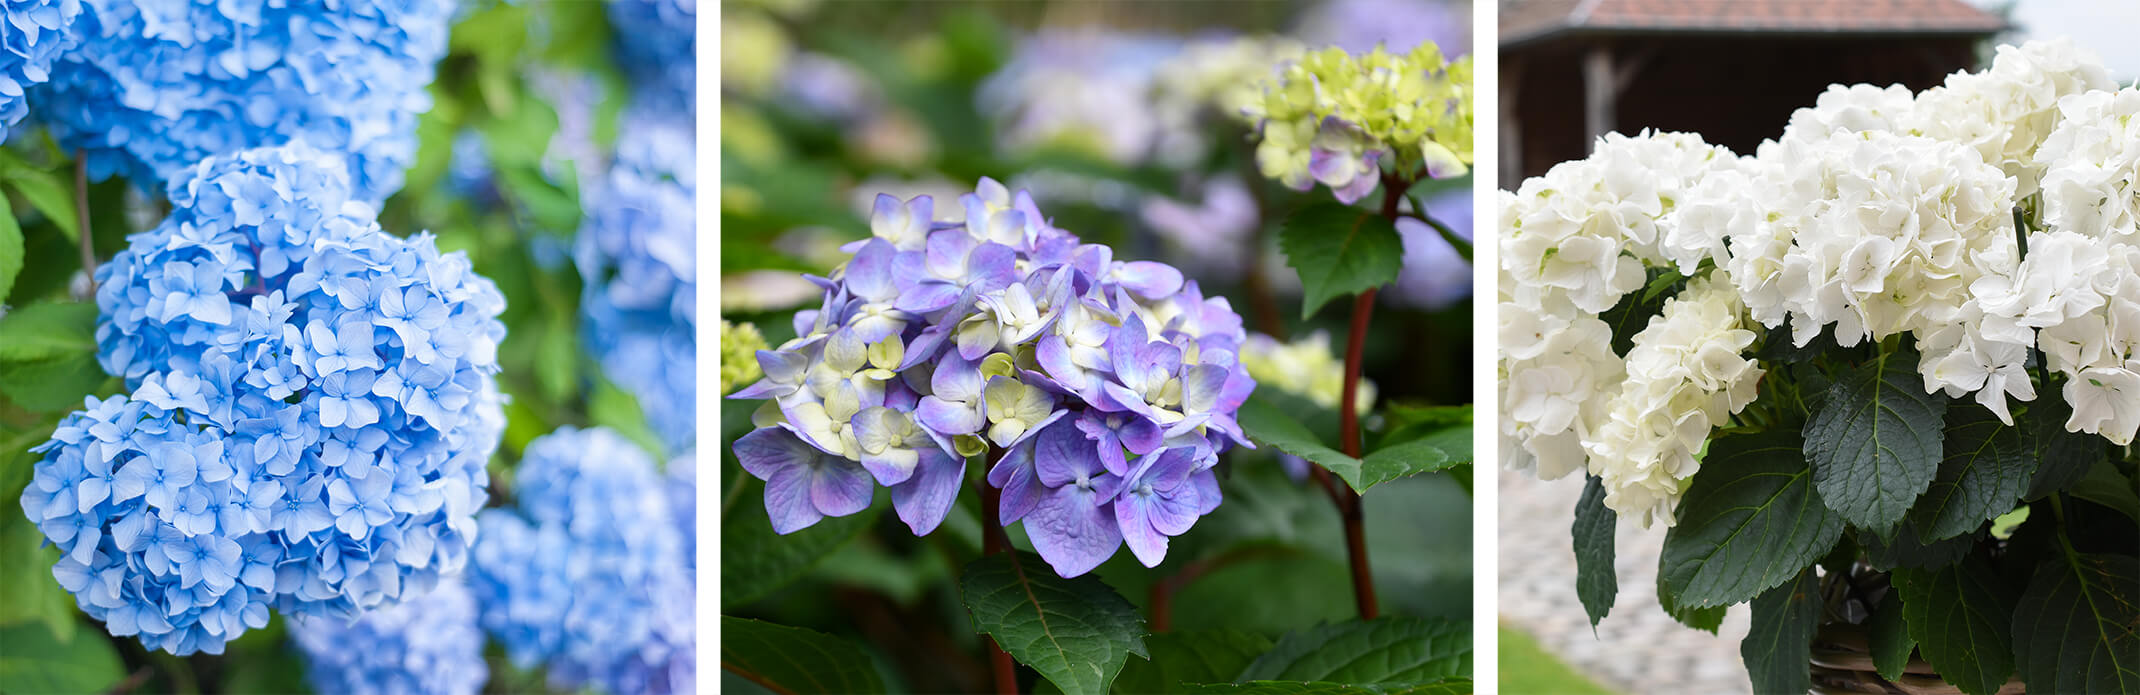 Hydrangeas endless summer - 3 varieties white, purple and blue